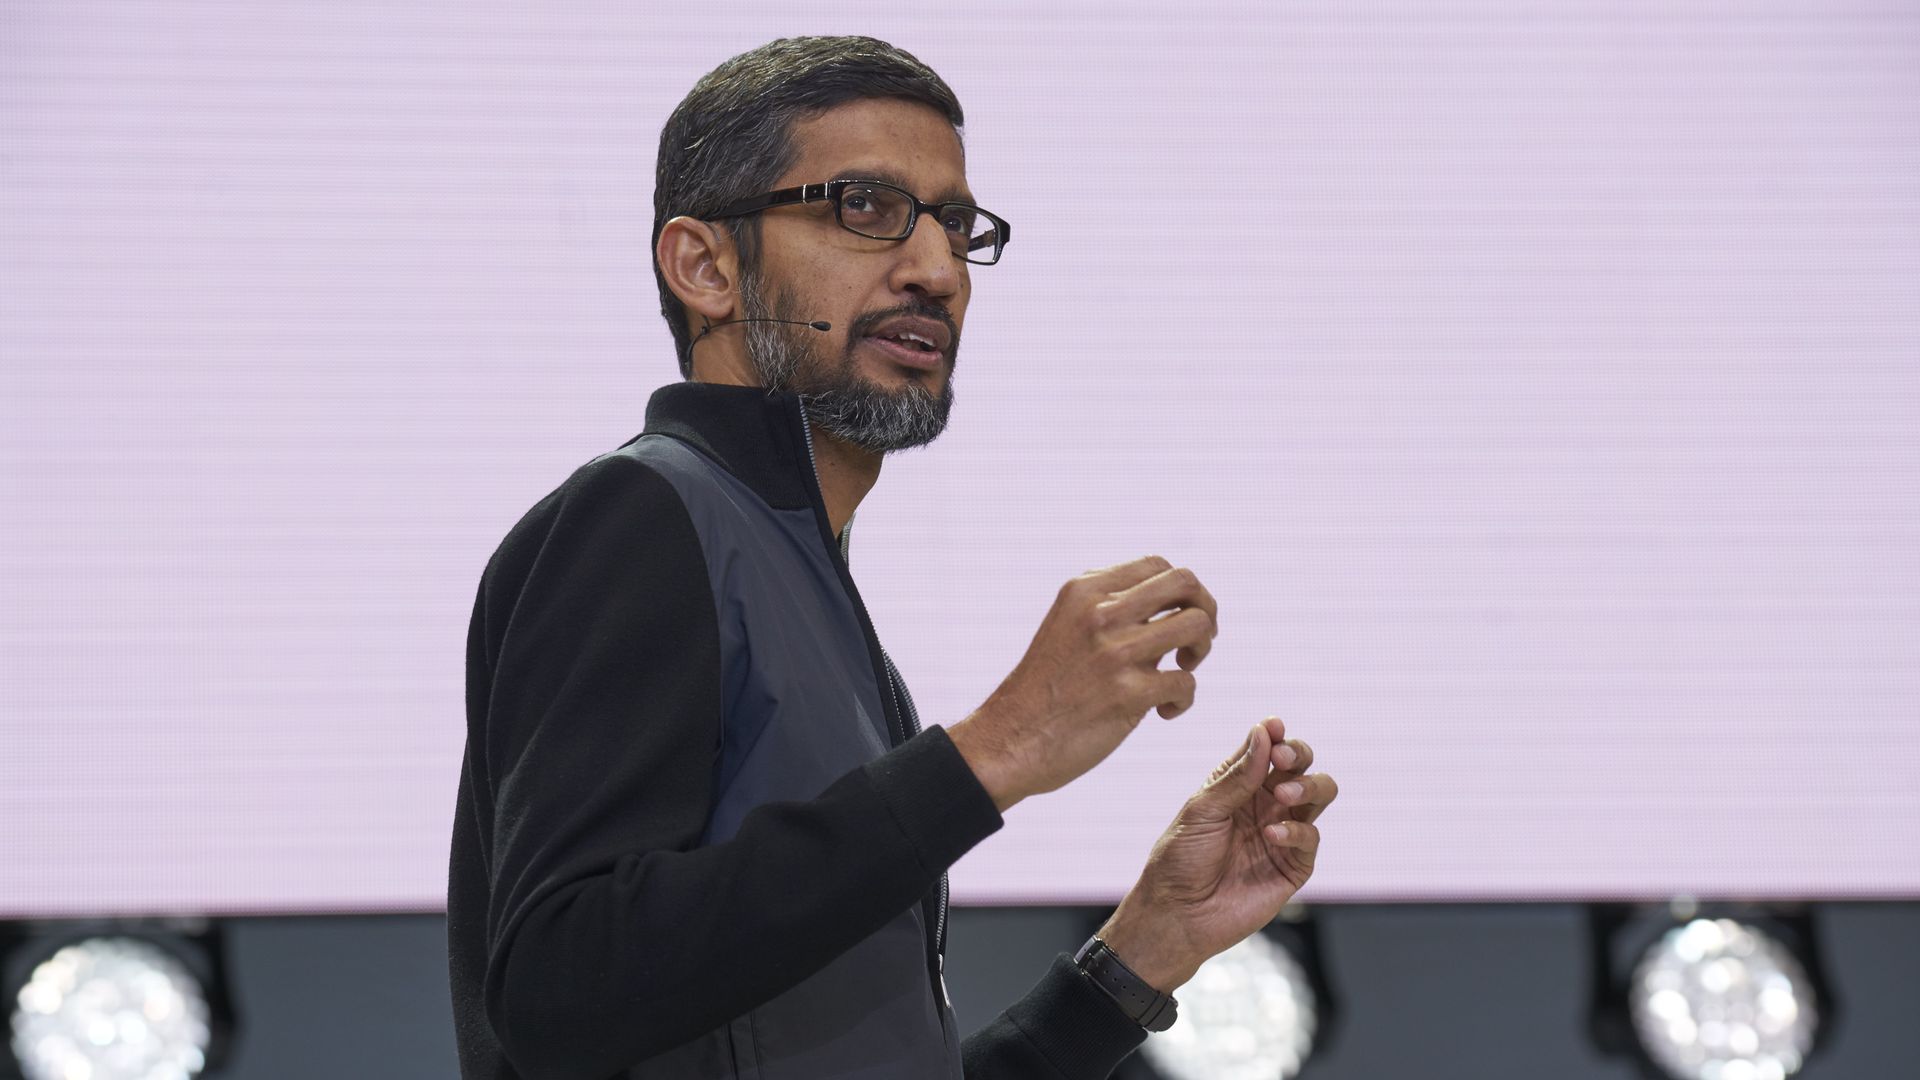 Google CEO Sundar Pichai speaking at I/O 2017